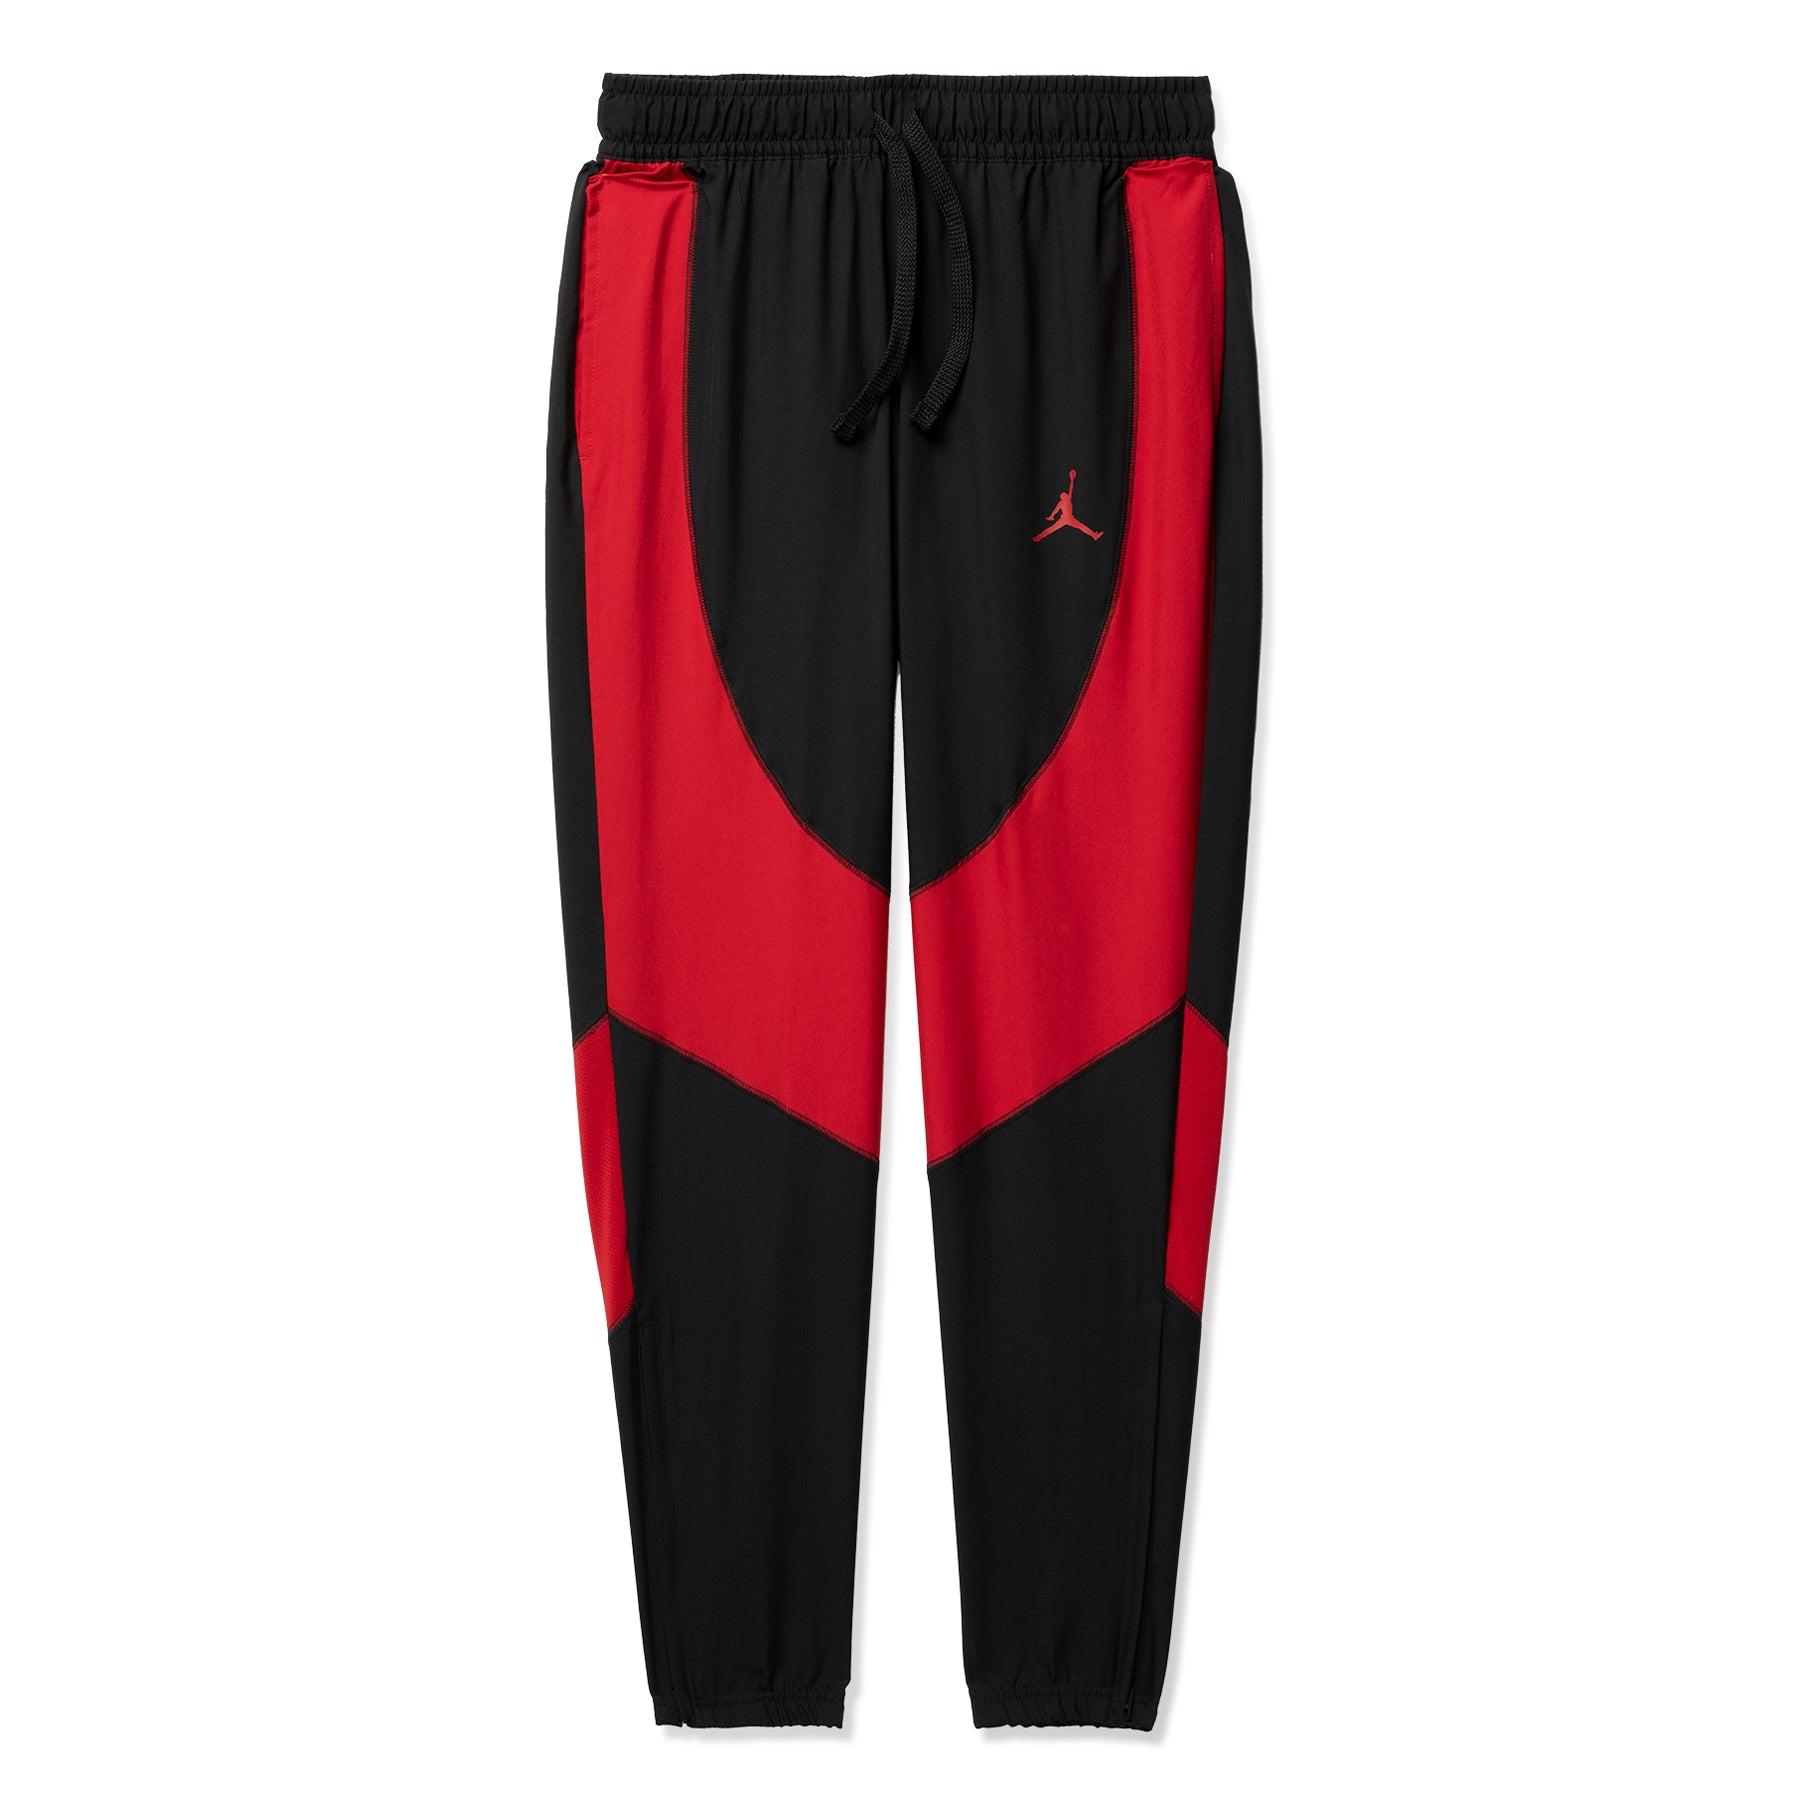 Jordan COMPRESSION SHORT - Pants - gym red/black/red - Zalando.de